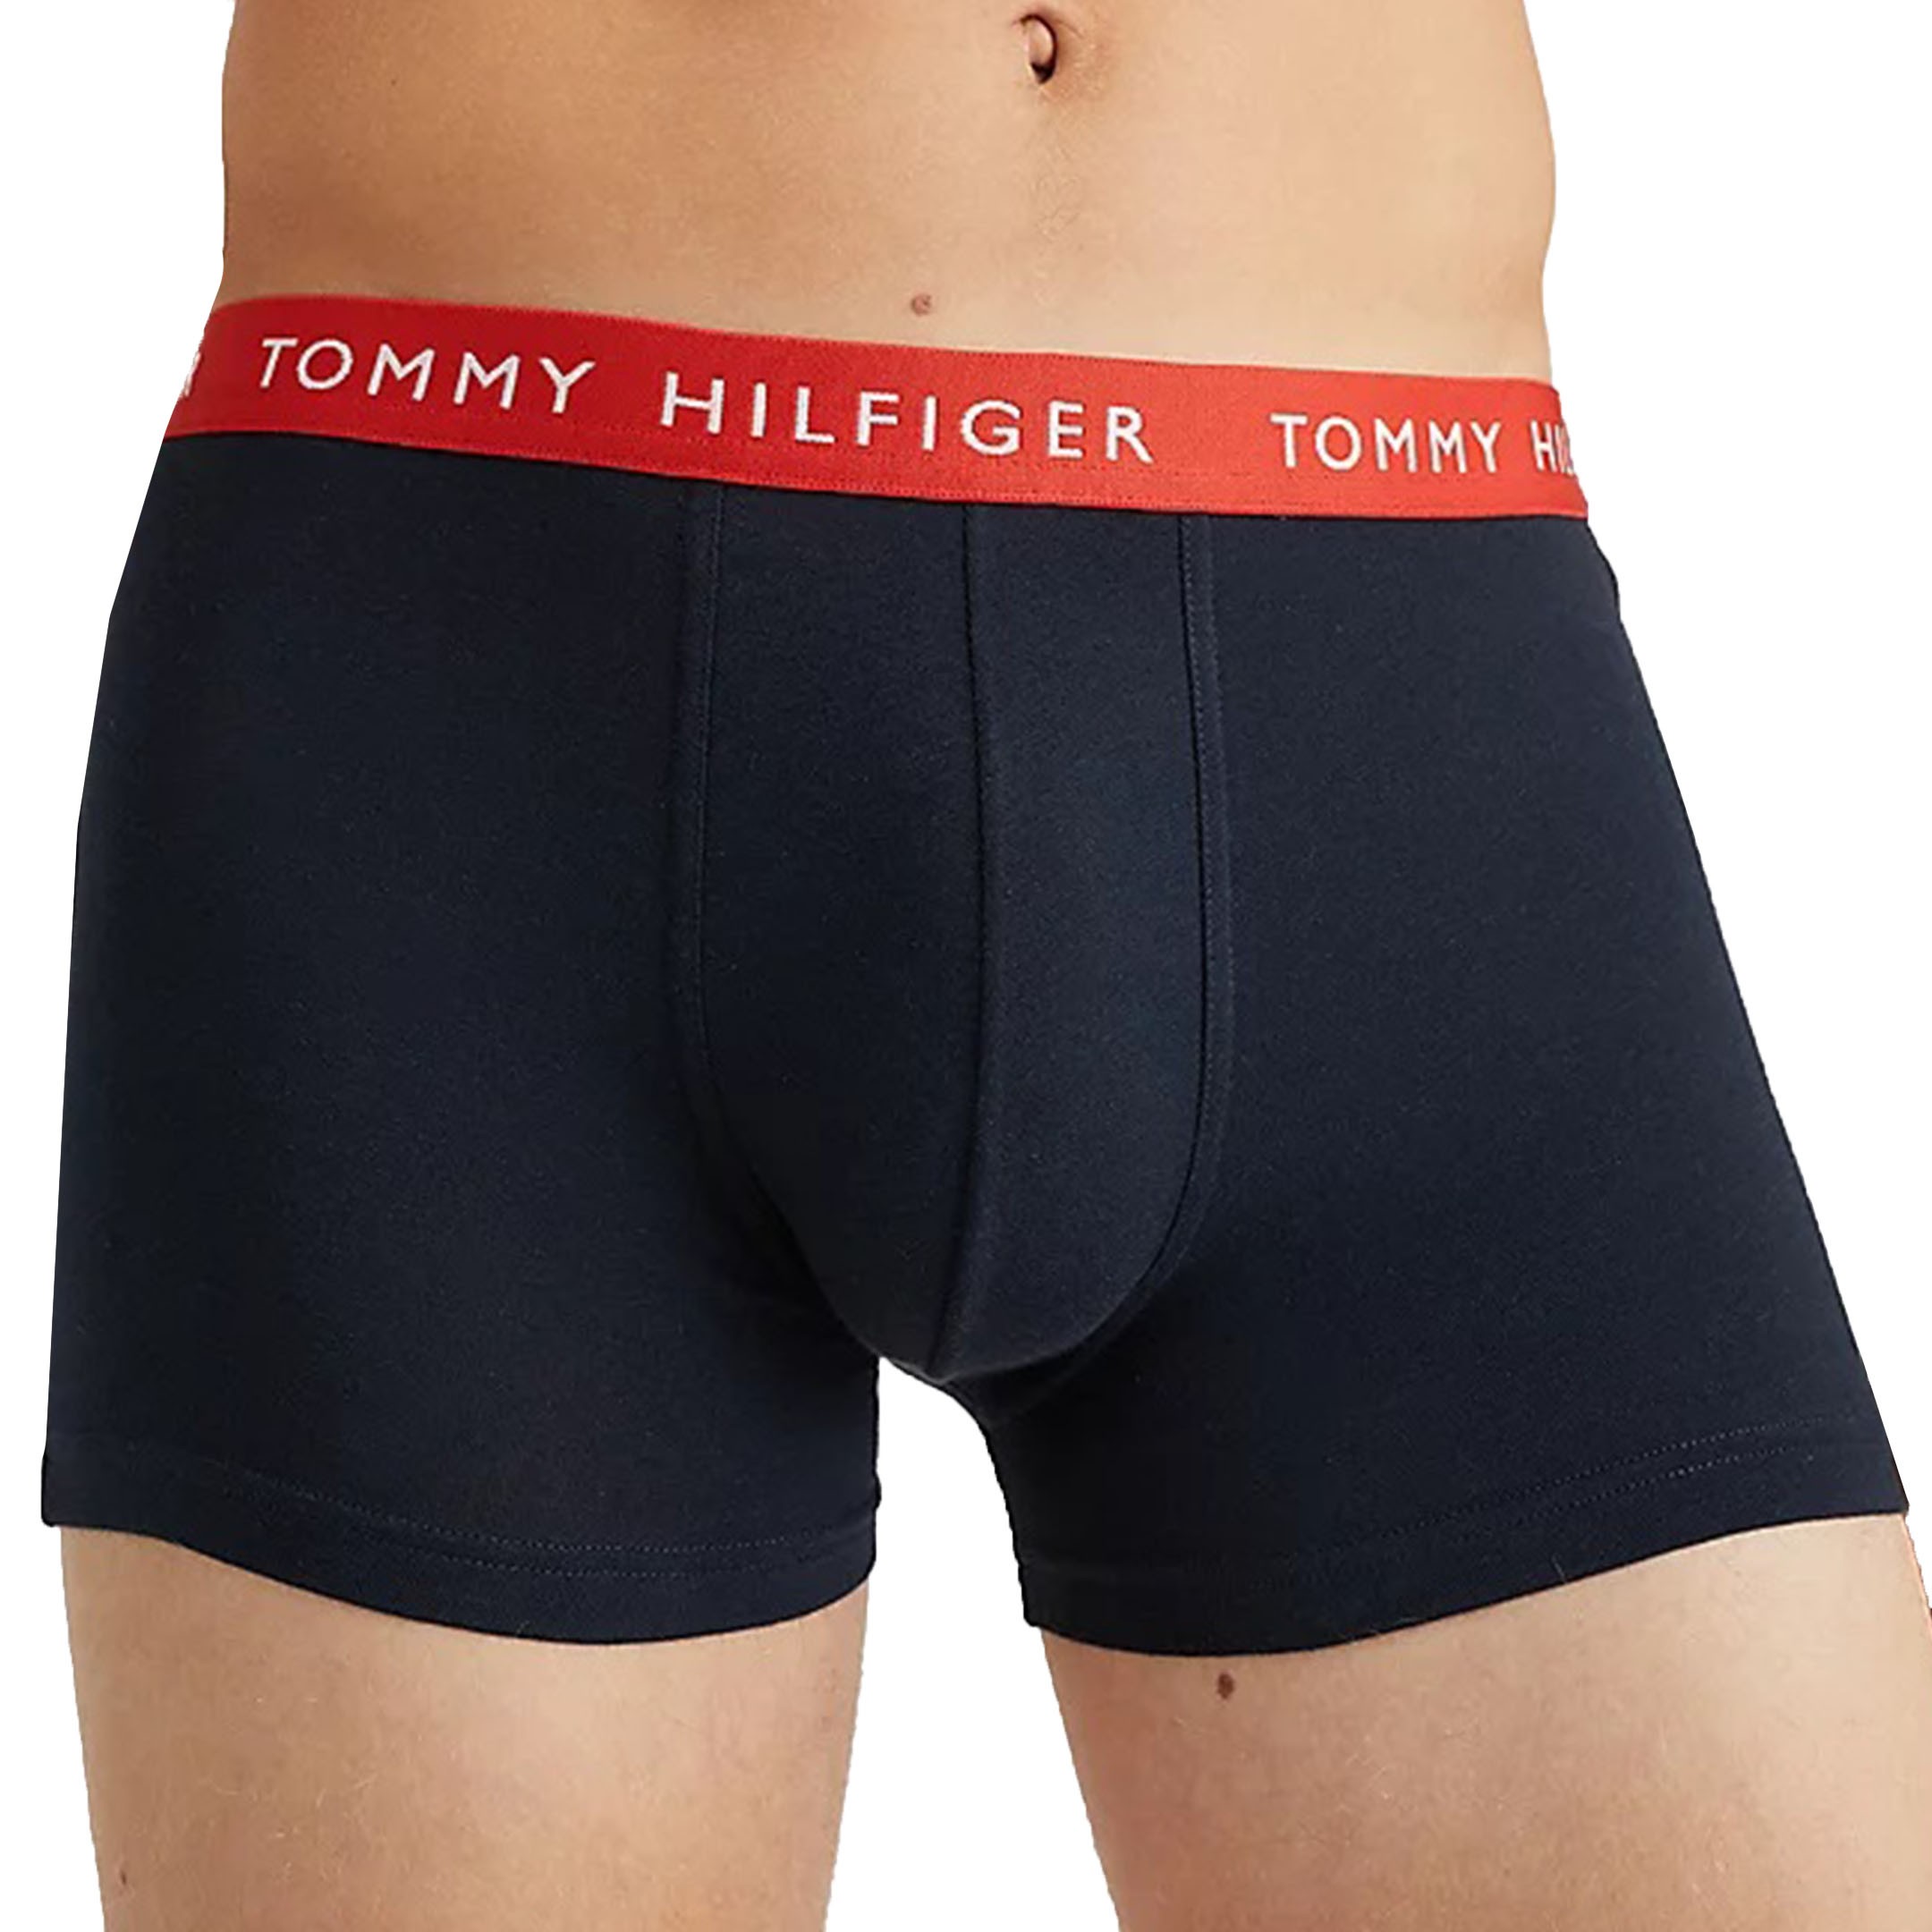 Panties Tommy Hilfiger 3Pack Recycled Essentials Bikini White / Grey /  Black